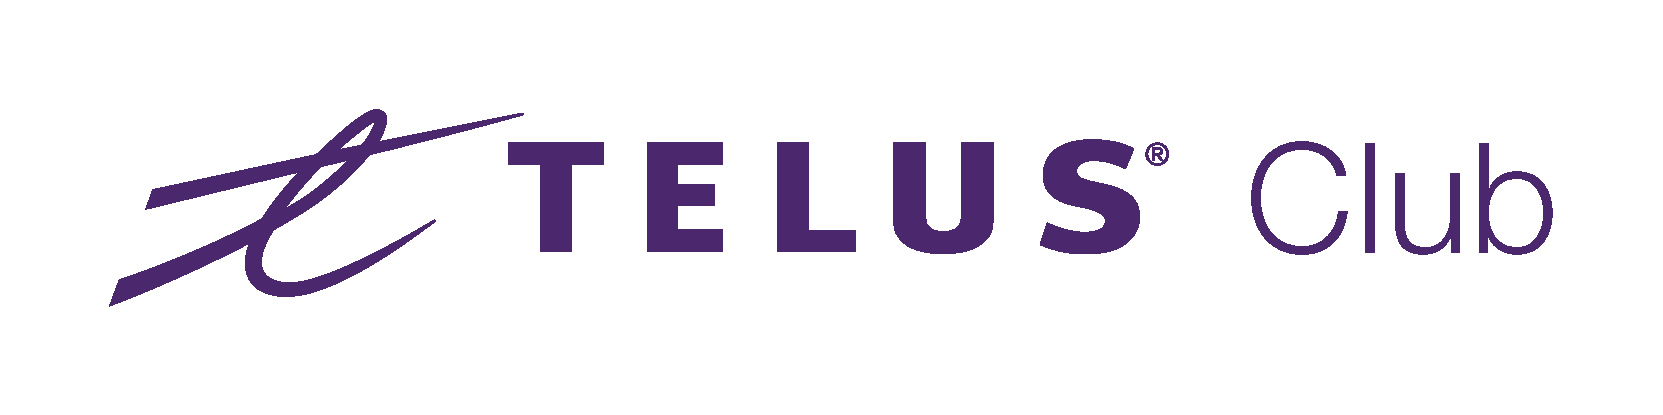 The Telus Club logo in purple